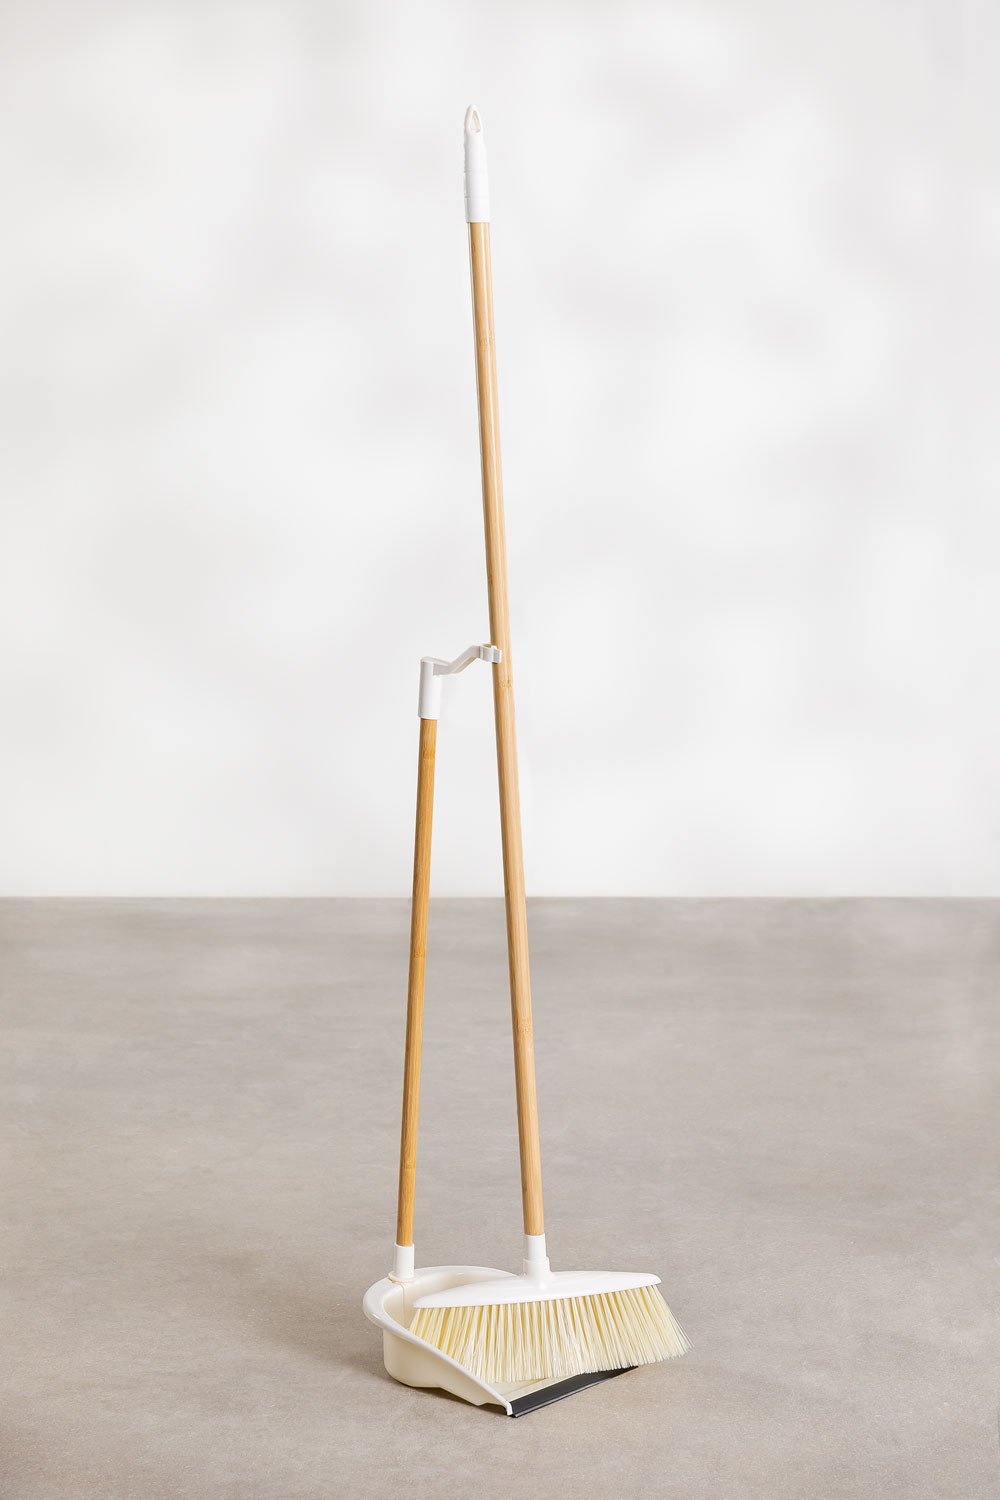 Addis Kehrschaufel & Bambus-Handfeger-Set, Natur, Grau/Holz, 35 x 22 x 6 cm